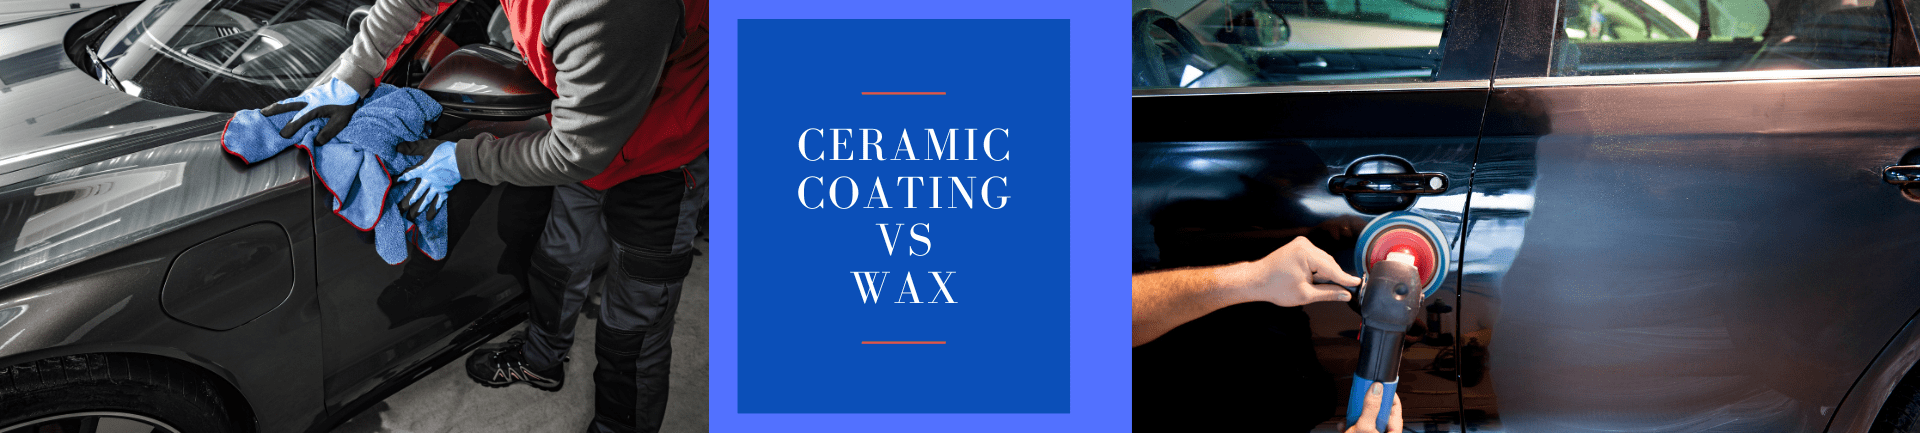 ceramic coating vs wax chicago